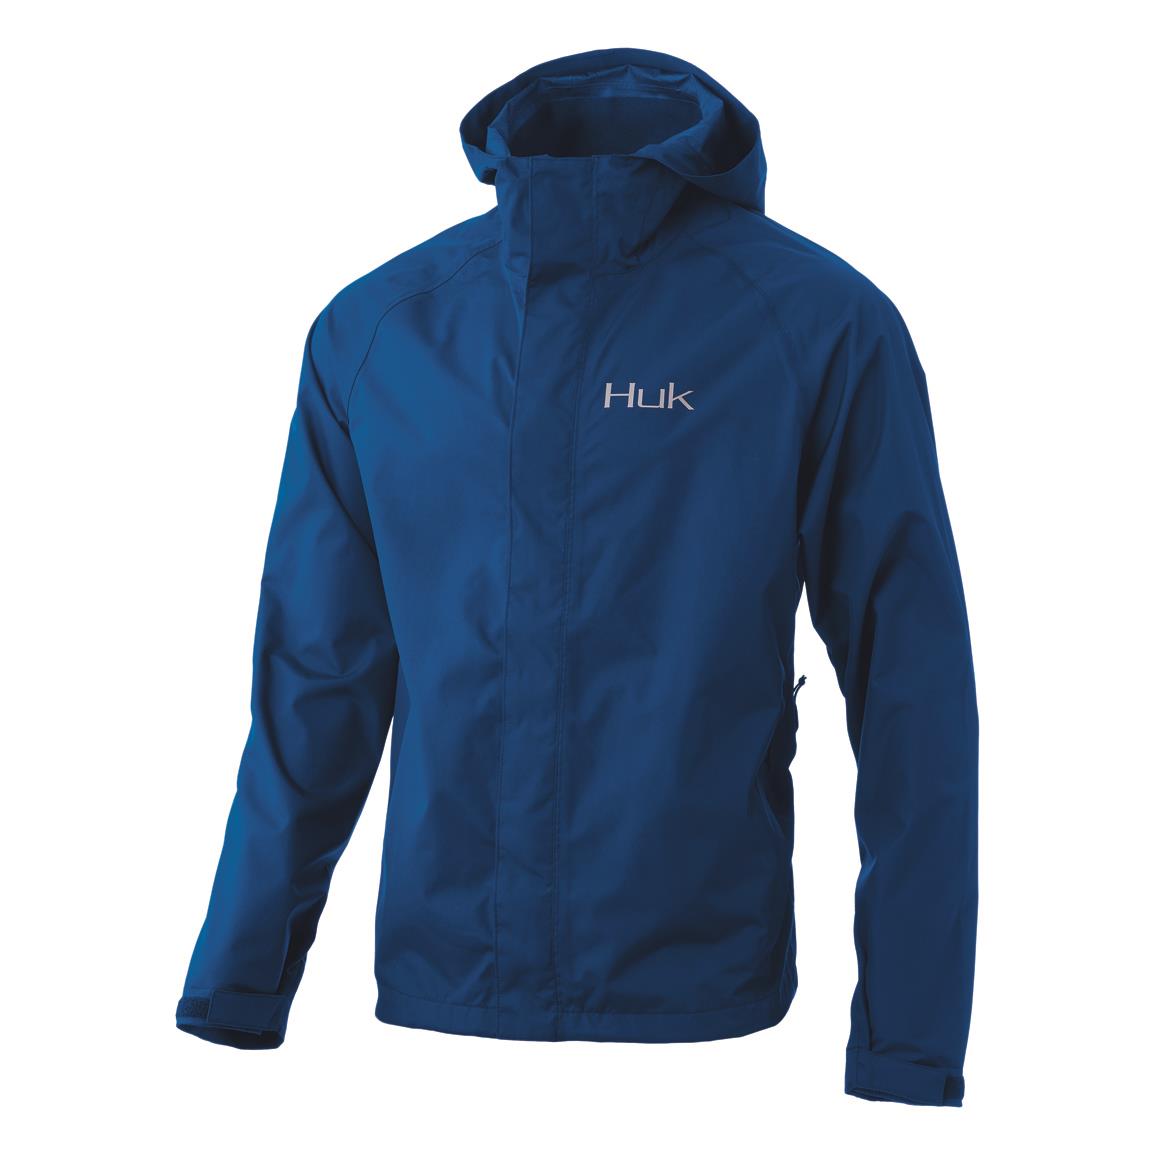 Huk Men's Gunwale Waterproof Rain Jacket, Huk Blue